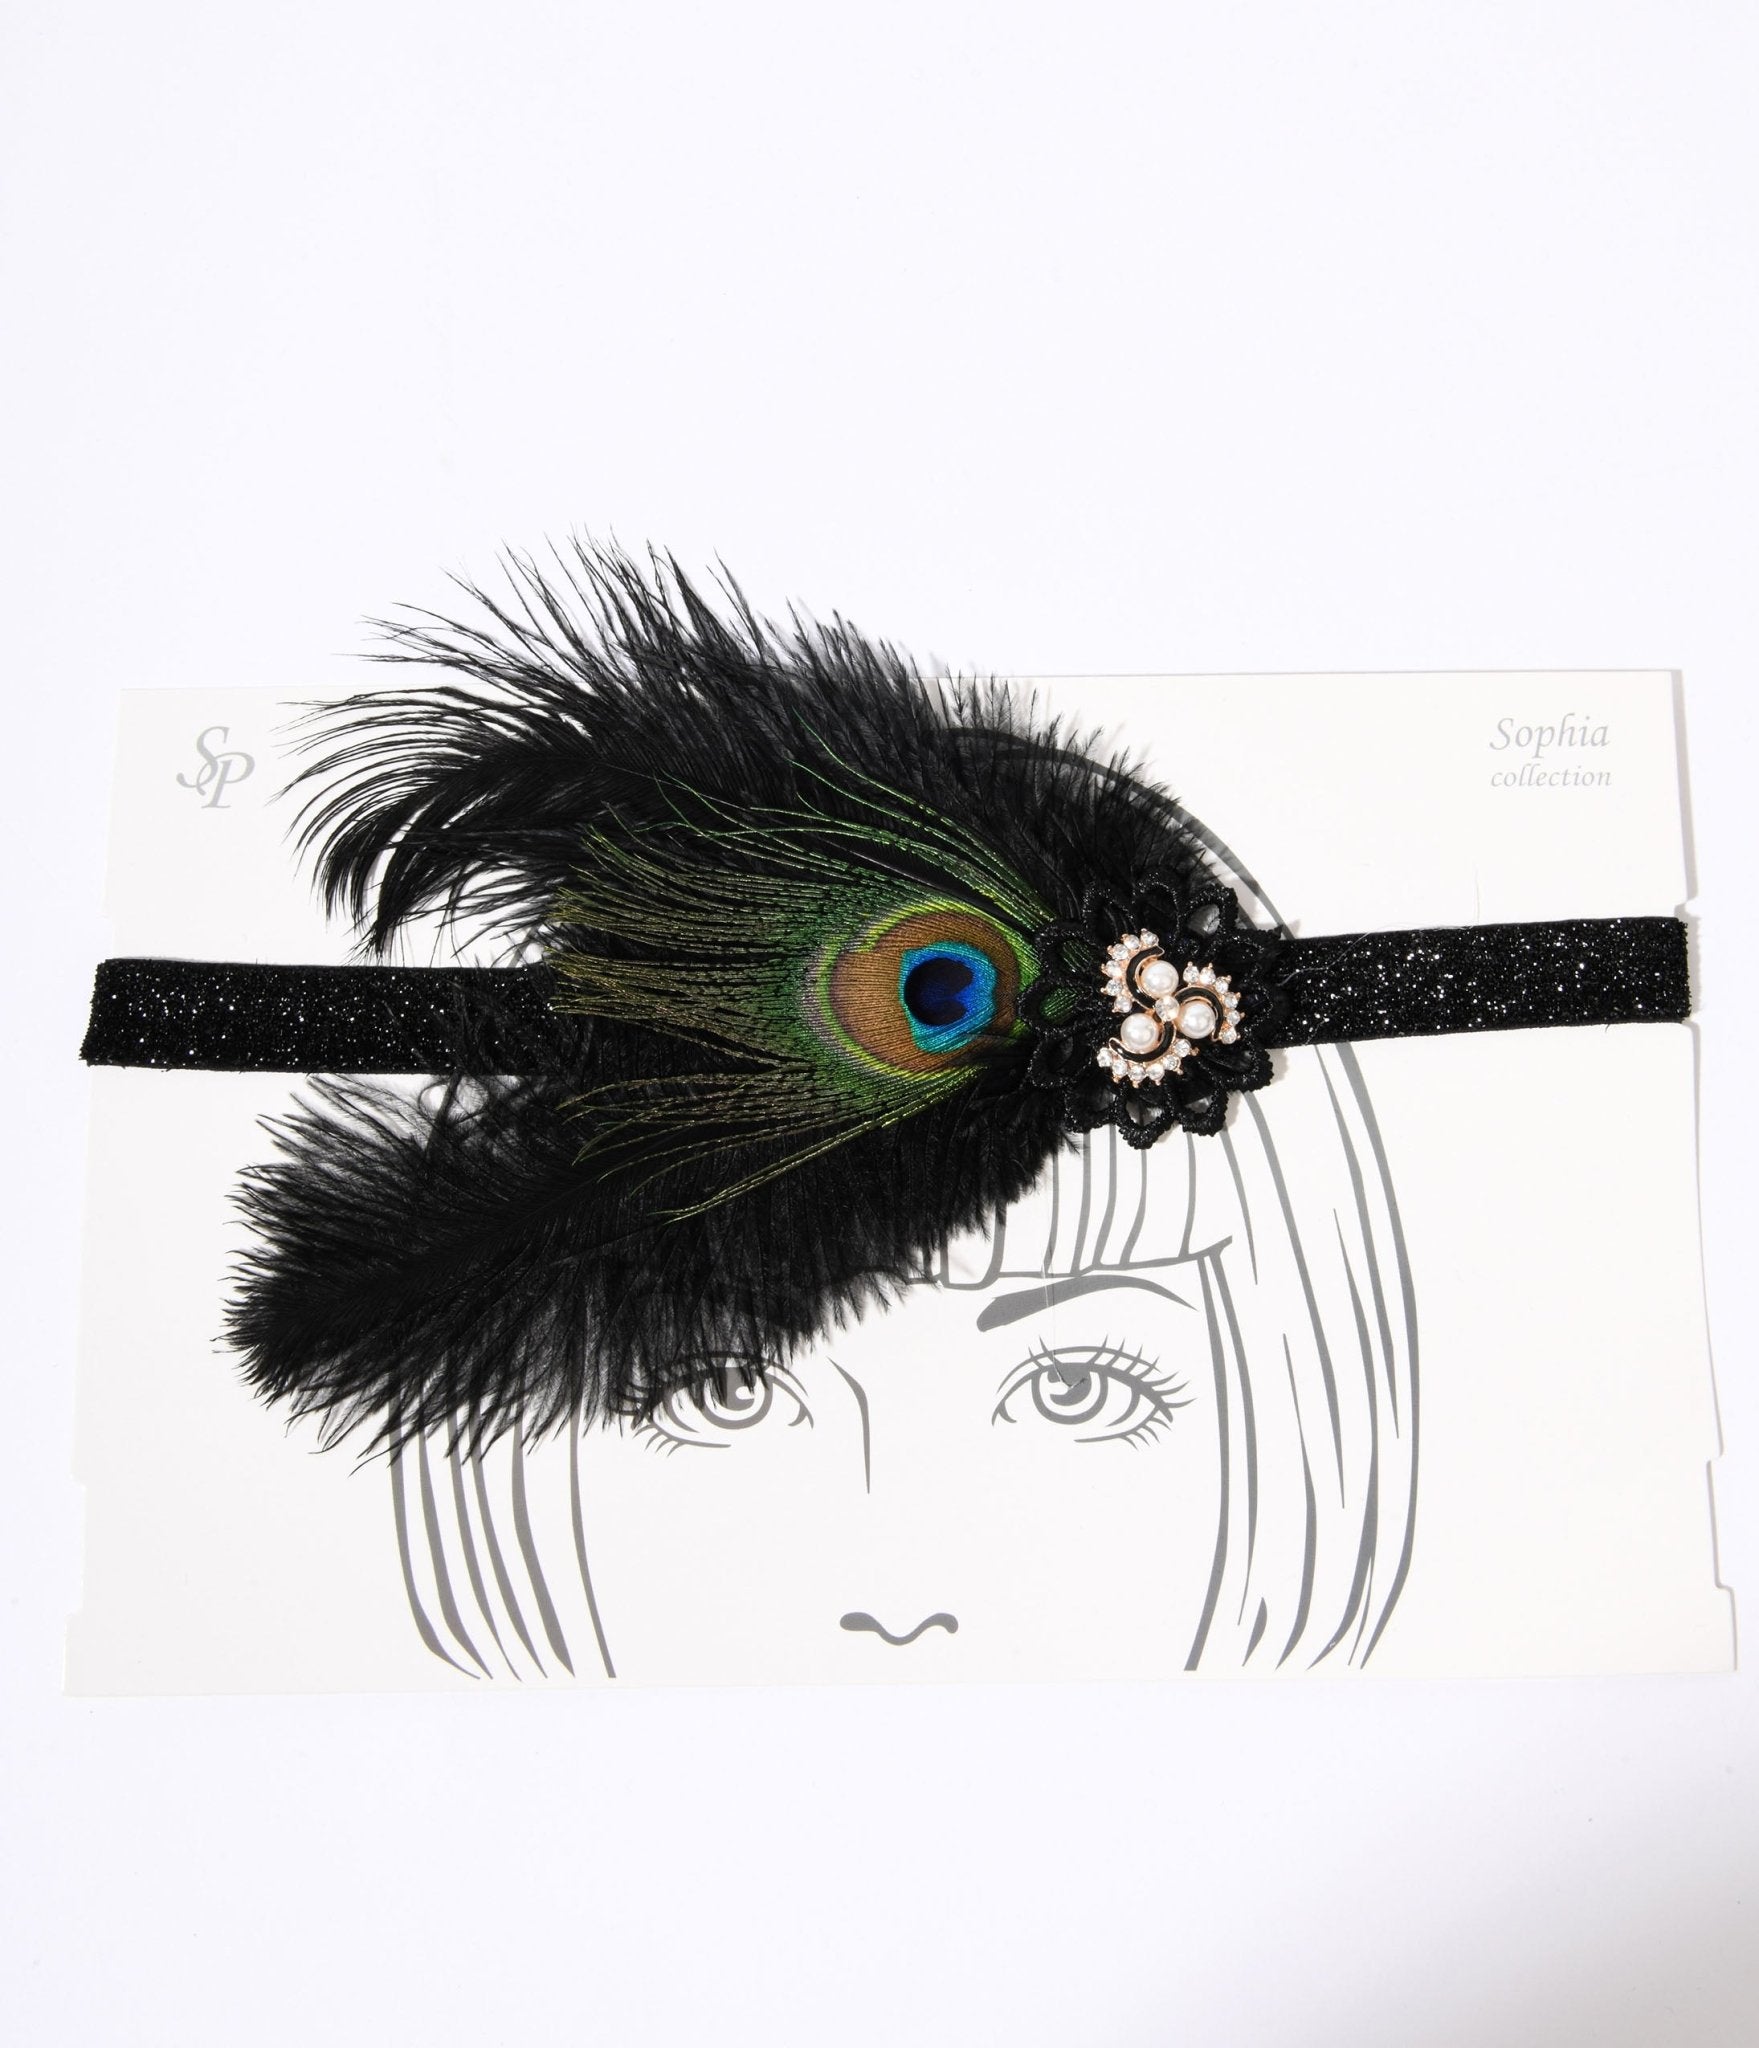 Peacock Feather & Pearl Gem Flapper Headband - Unique Vintage - Womens, ACCESSORIES, FLAPPER